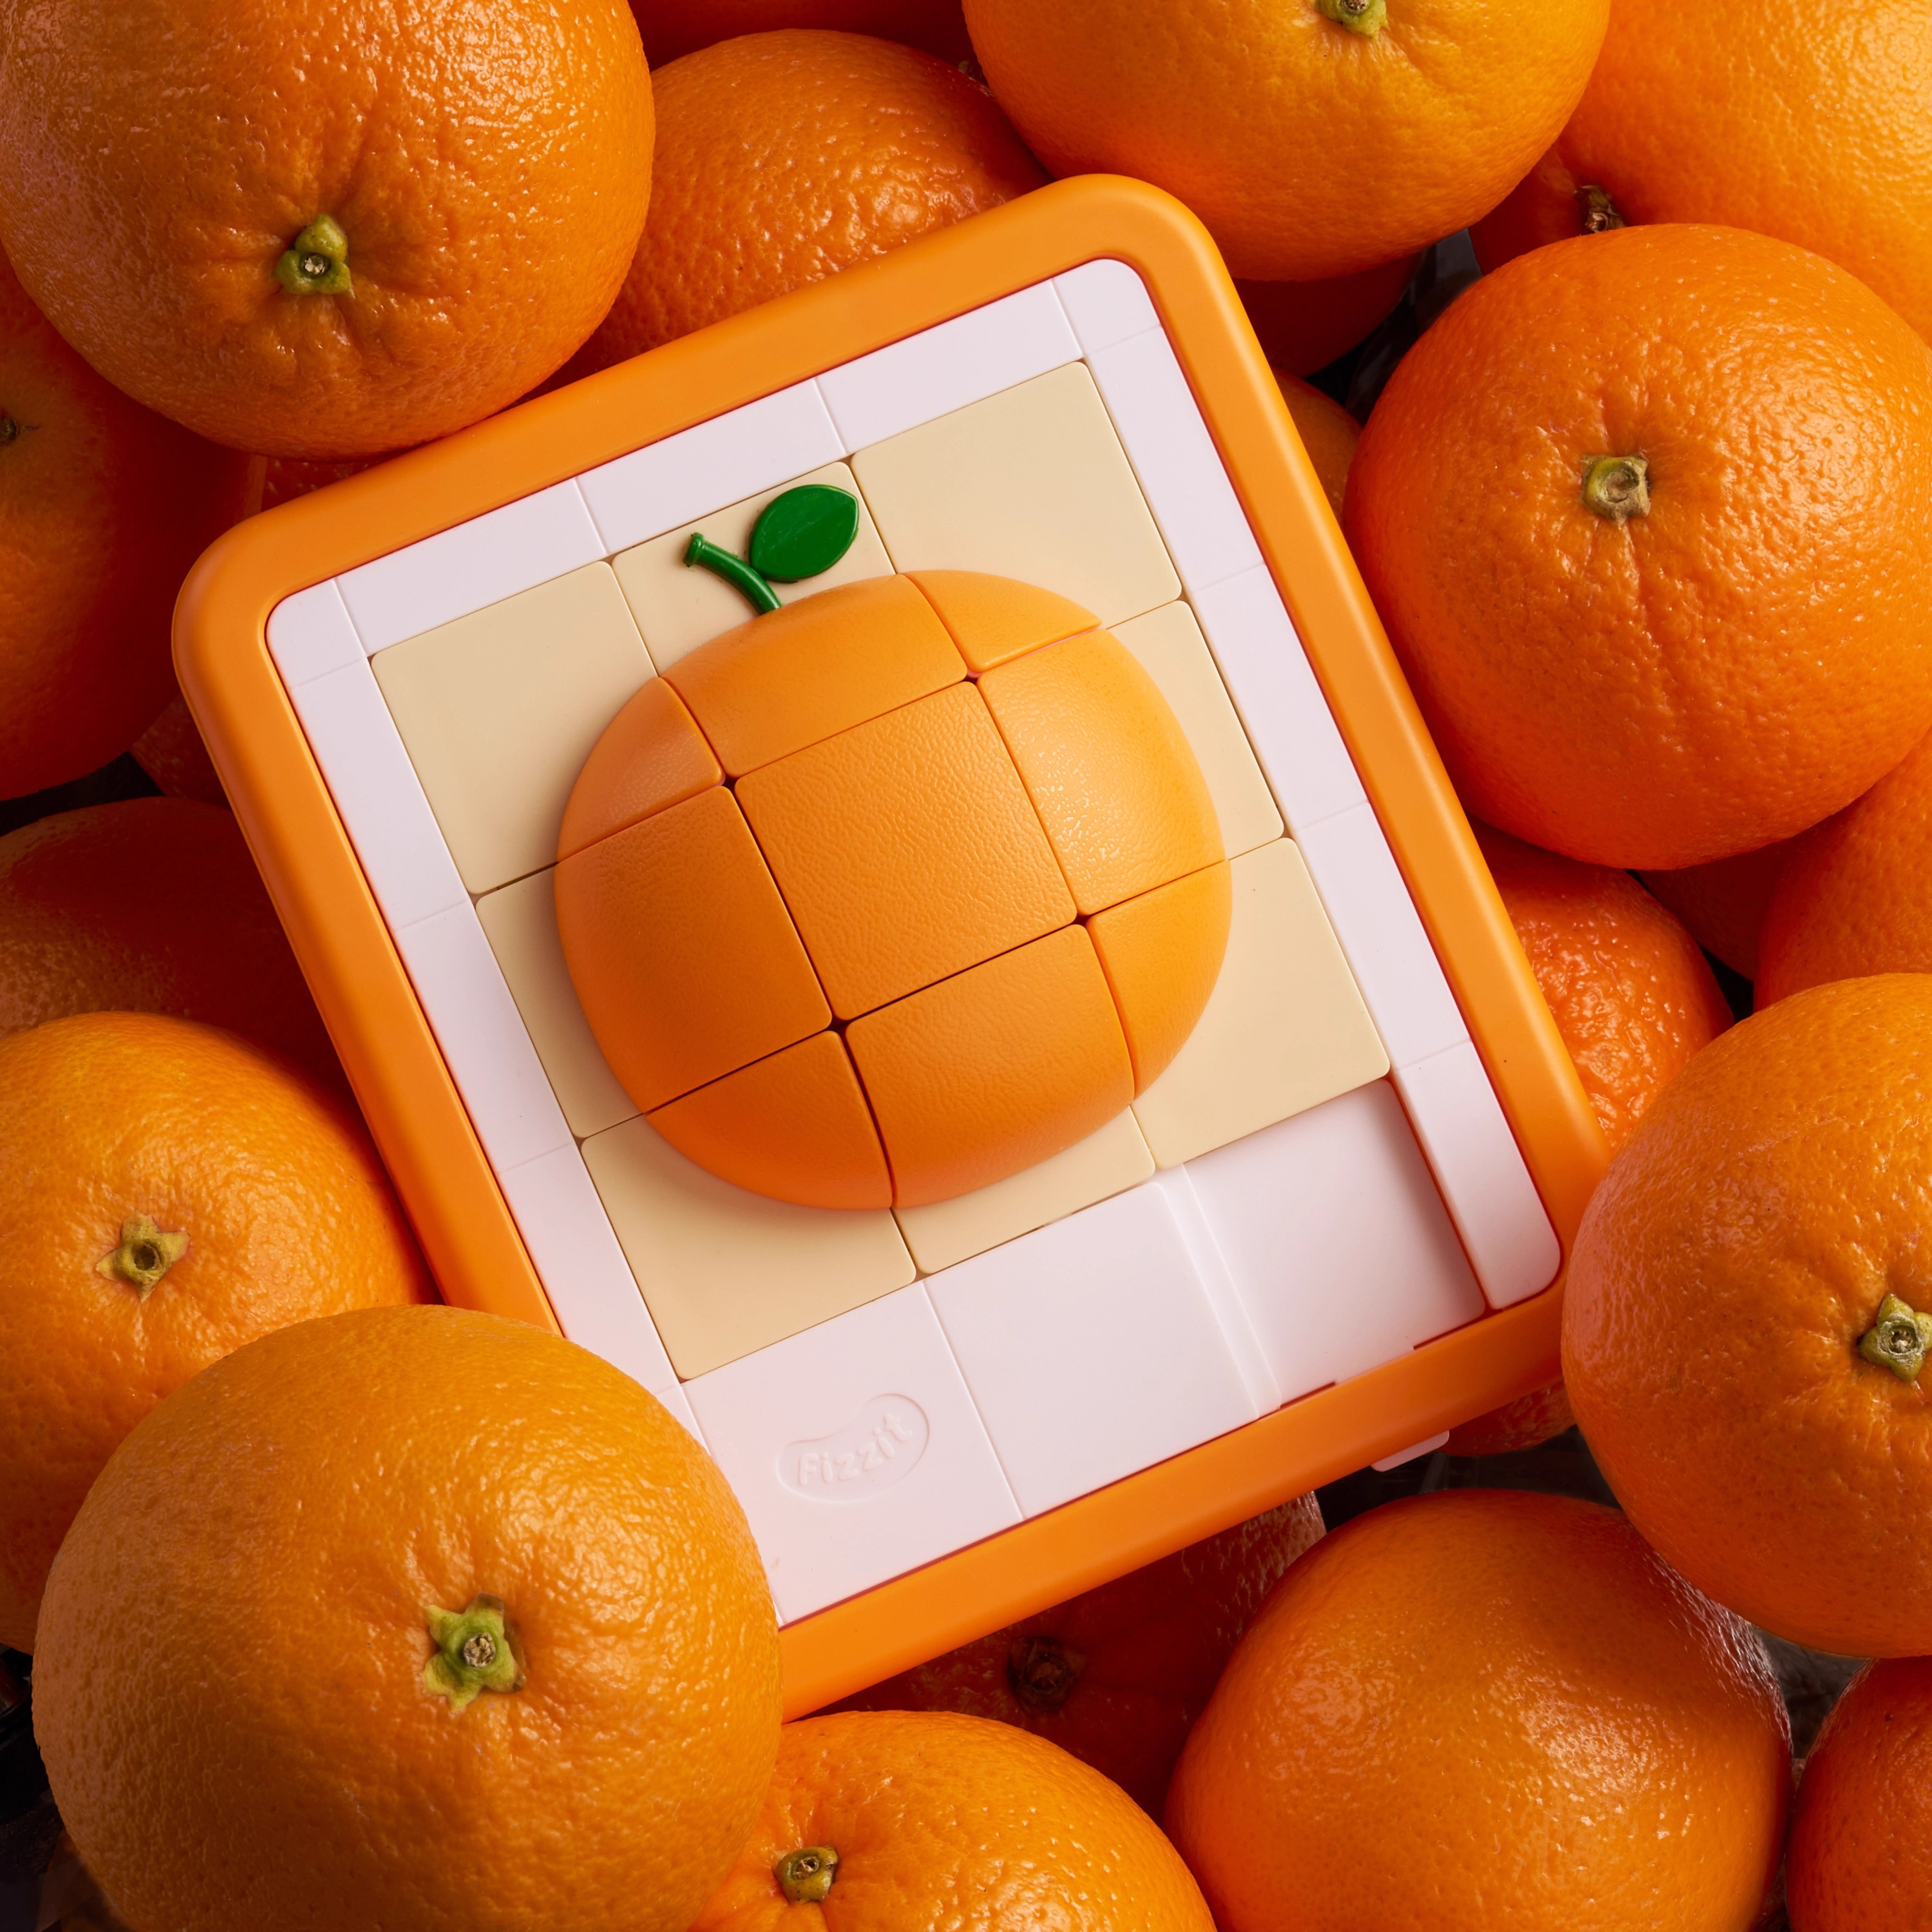 Fizzit立体华容道橙子数字棋移动拼图儿童玩具逻辑思维训练益智